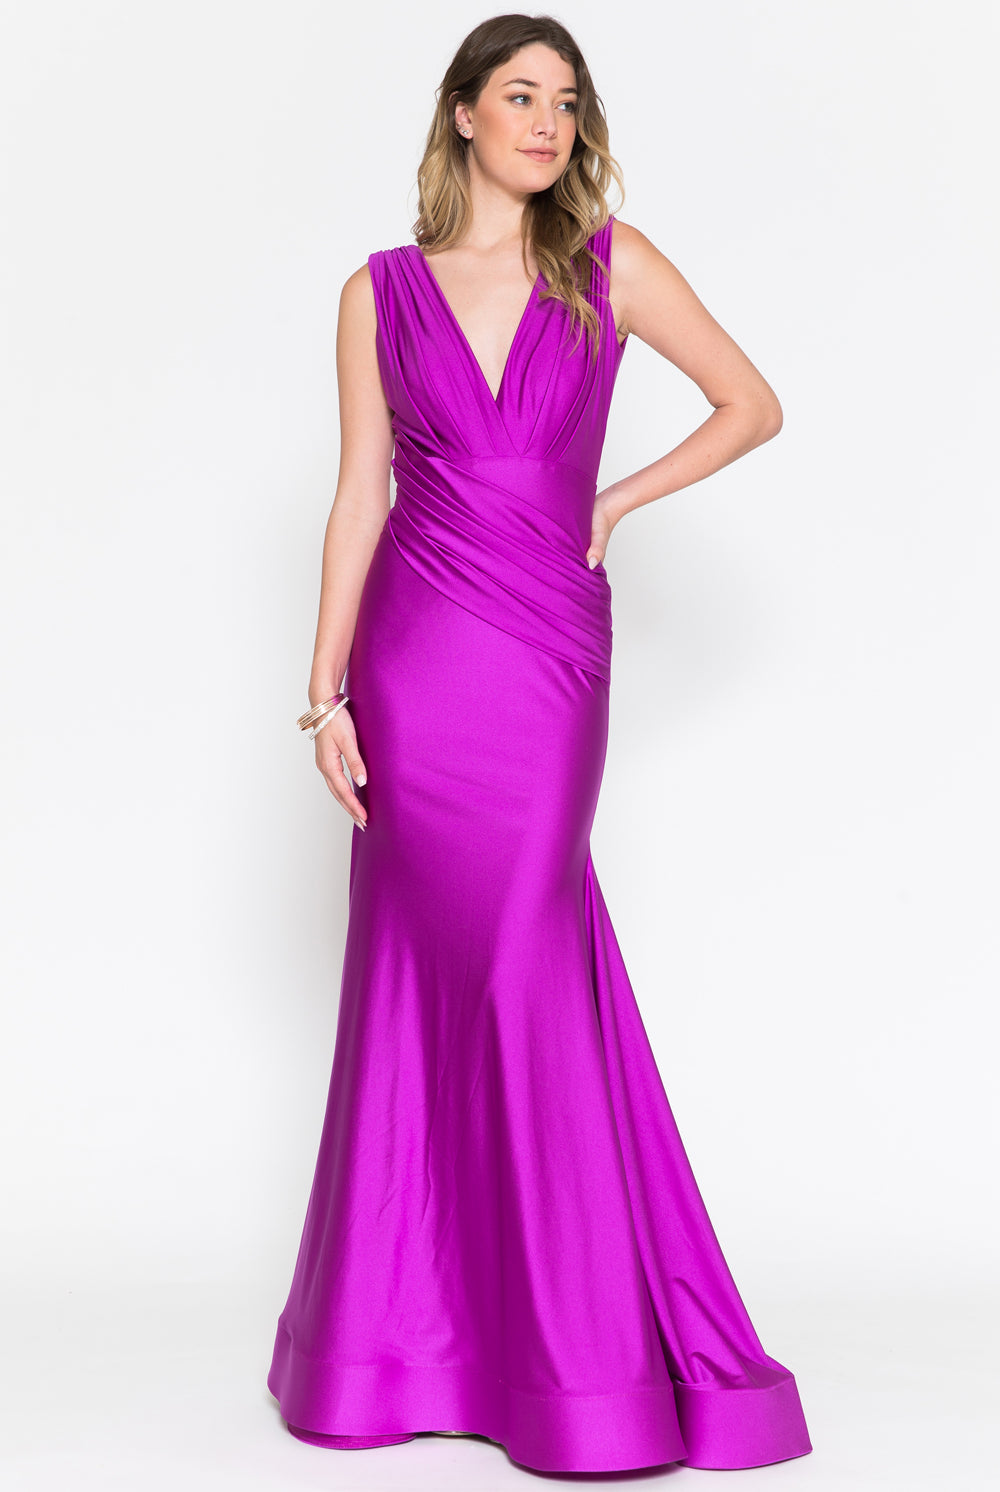 Sleeveless Fit & Flare Lycra Ruched Waist Plunge Neck Long Prom Dress AC370-1-Prom Dress-smcfashion.com